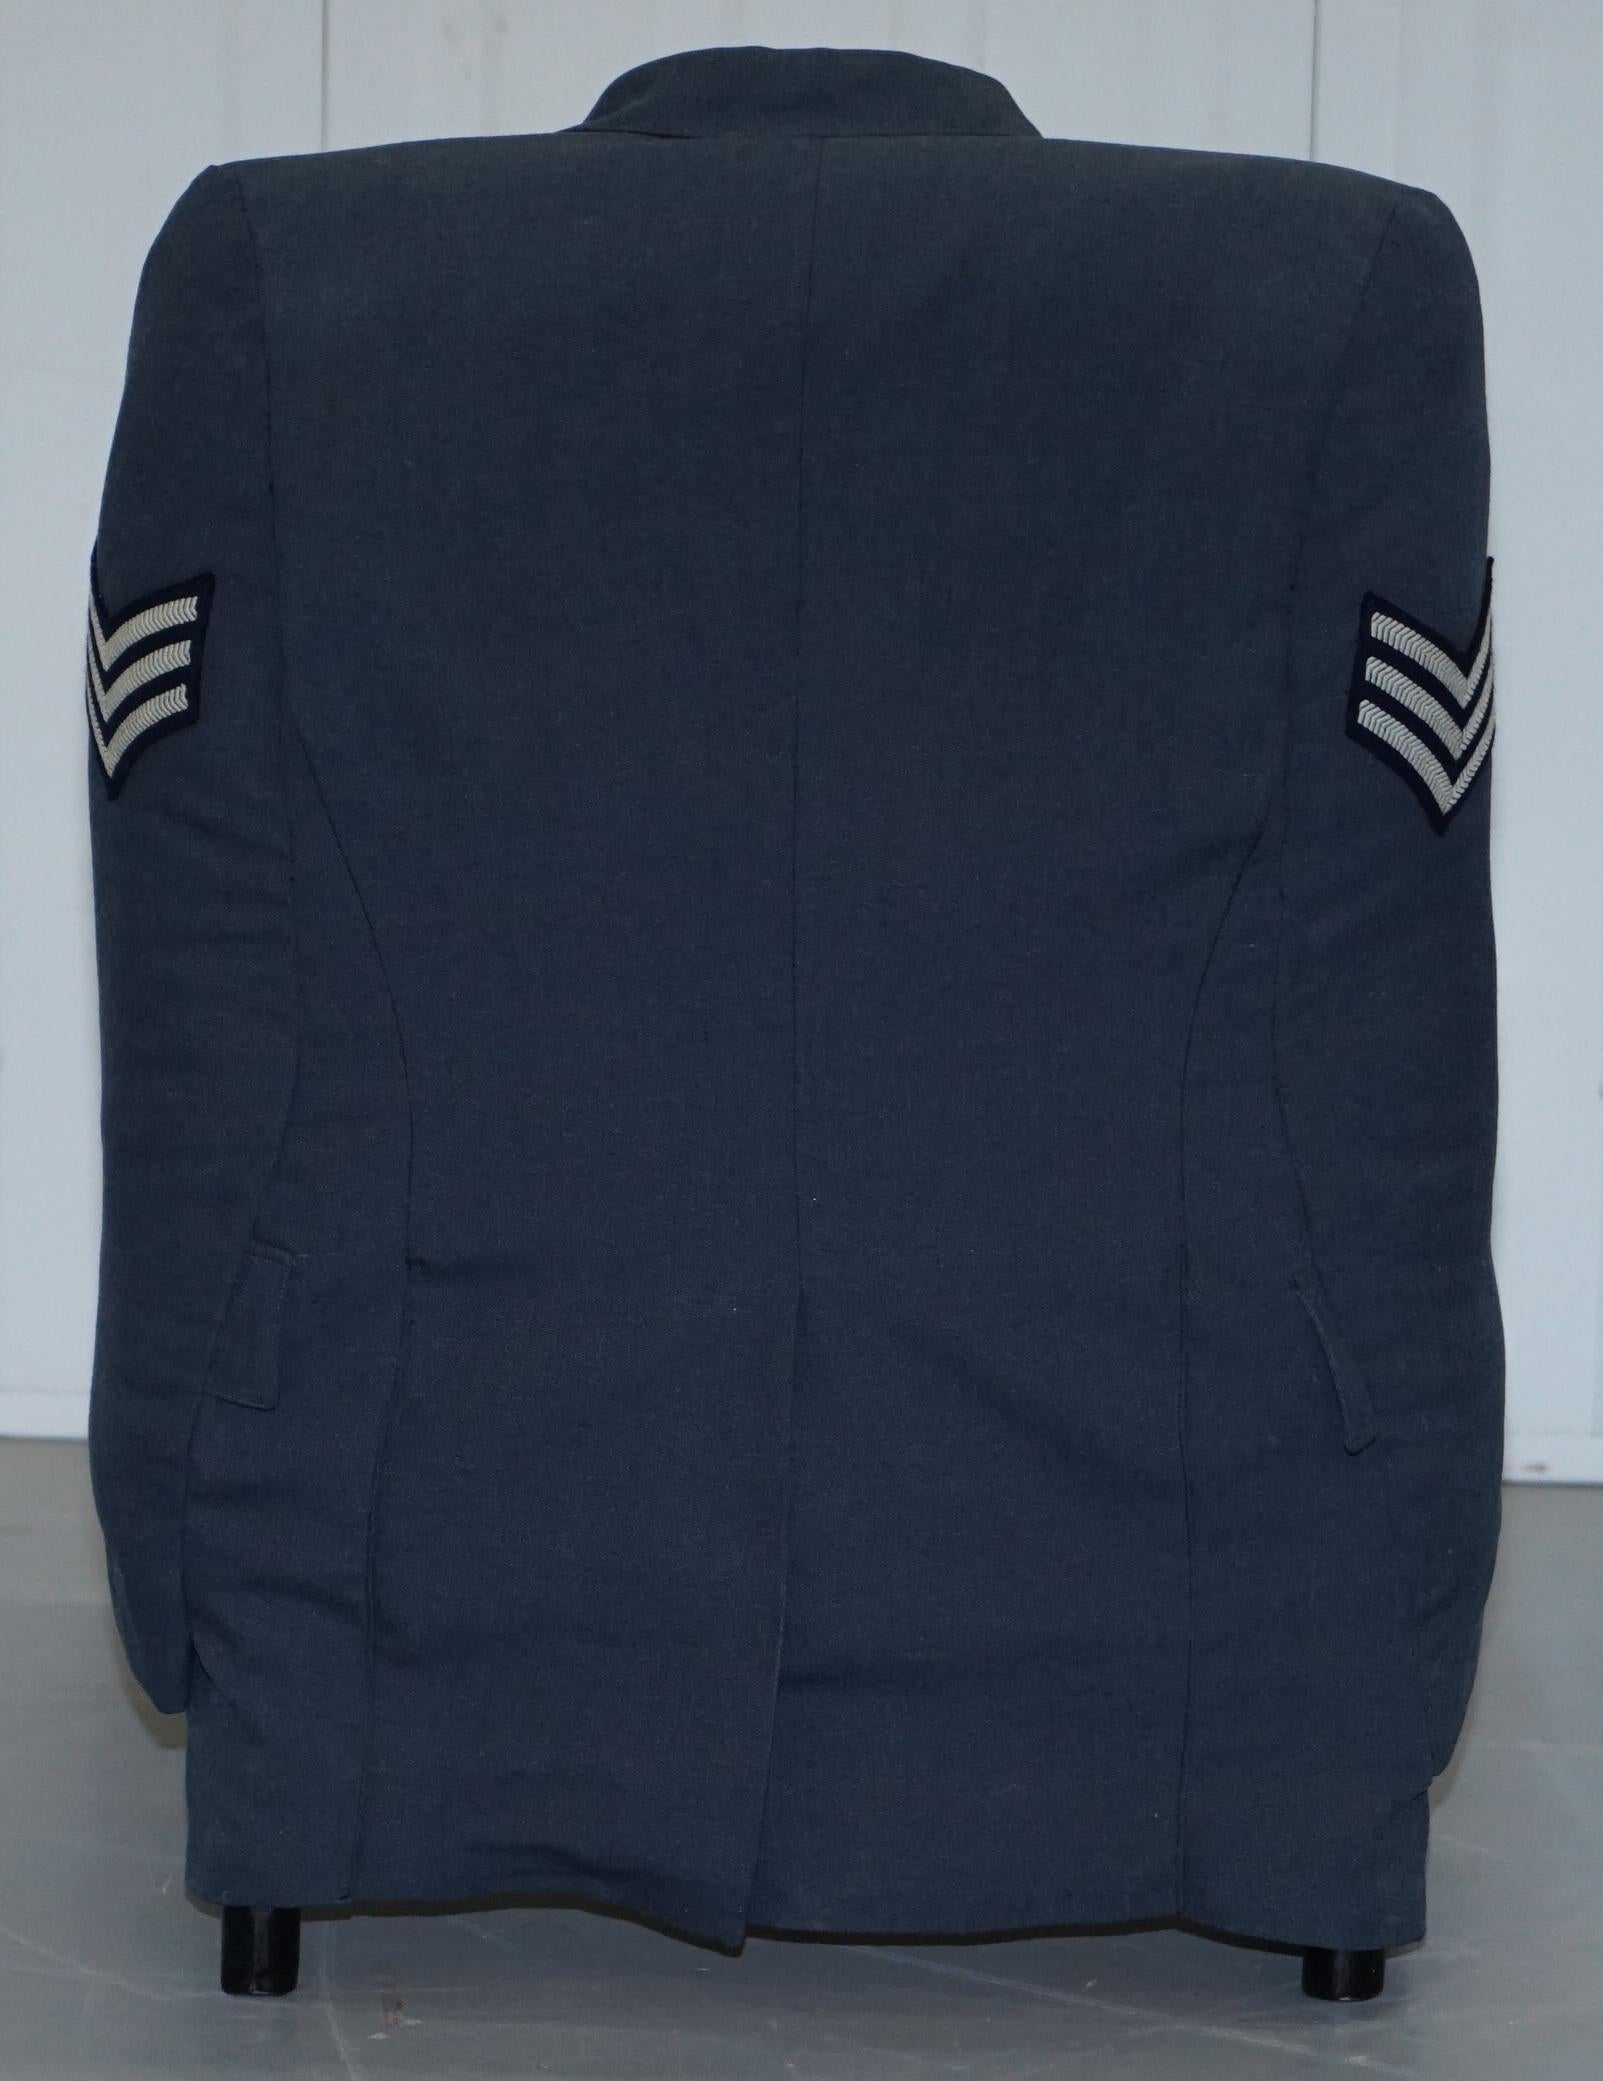 Treniq the Royal Air Force RAF Uniform Armchair Rare Unique Find For Sale 7